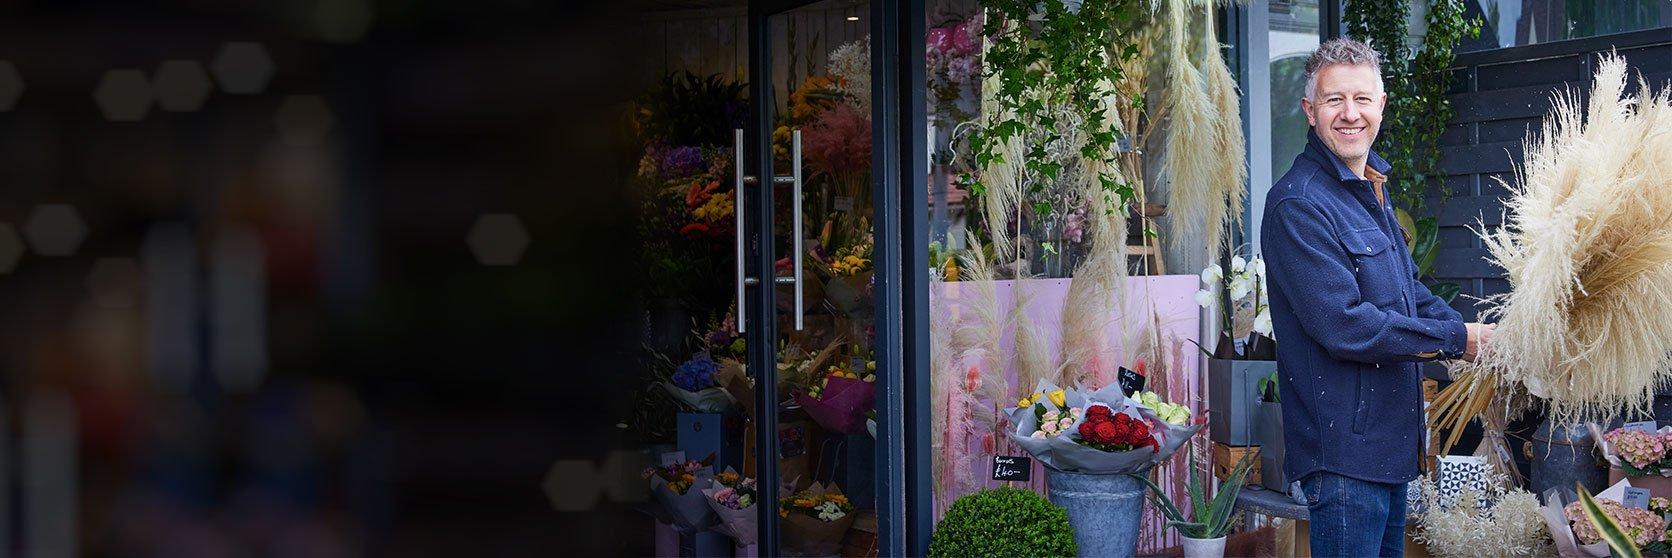 Florist-Banner-Steve-outside-shop